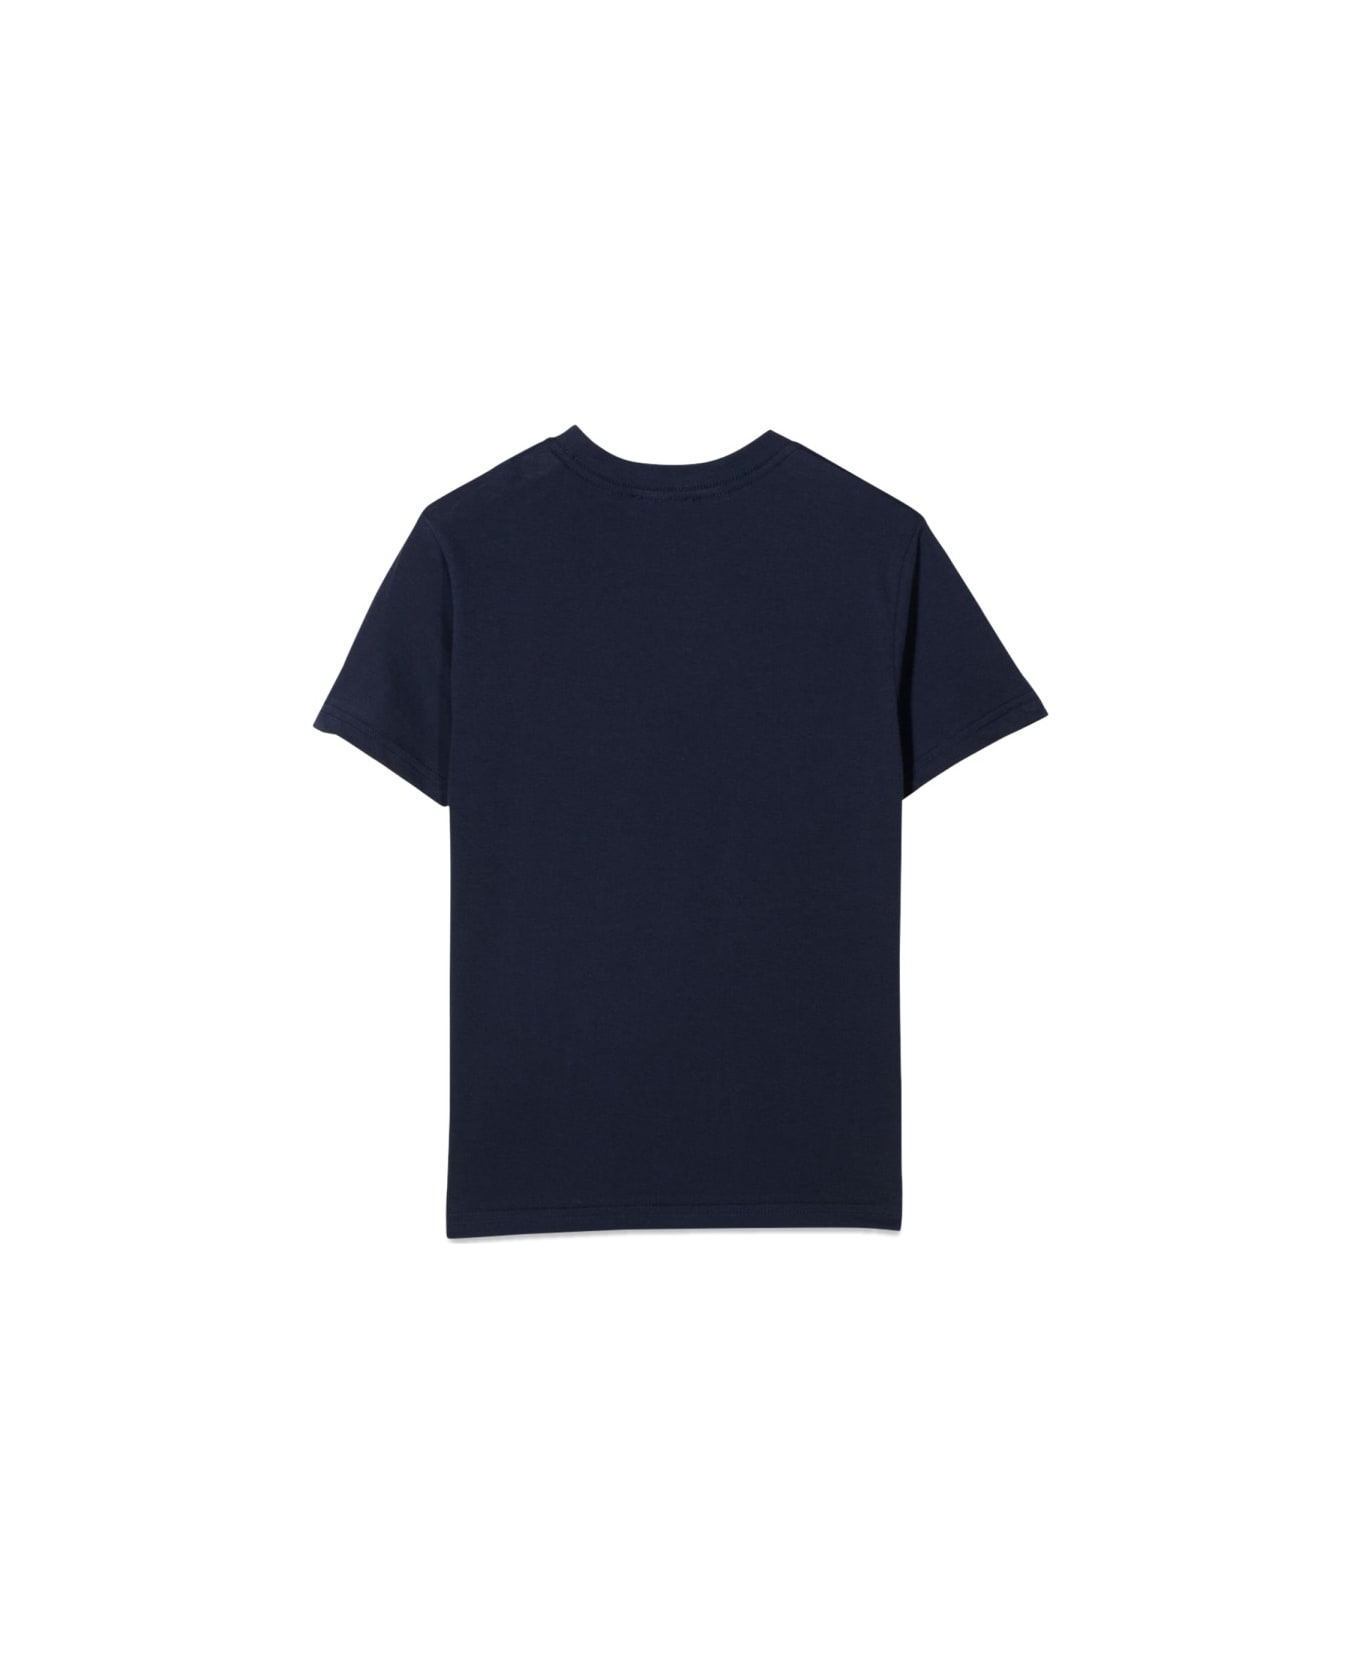 Diesel T-shirt Logo - BLUE Tシャツ＆ポロシャツ